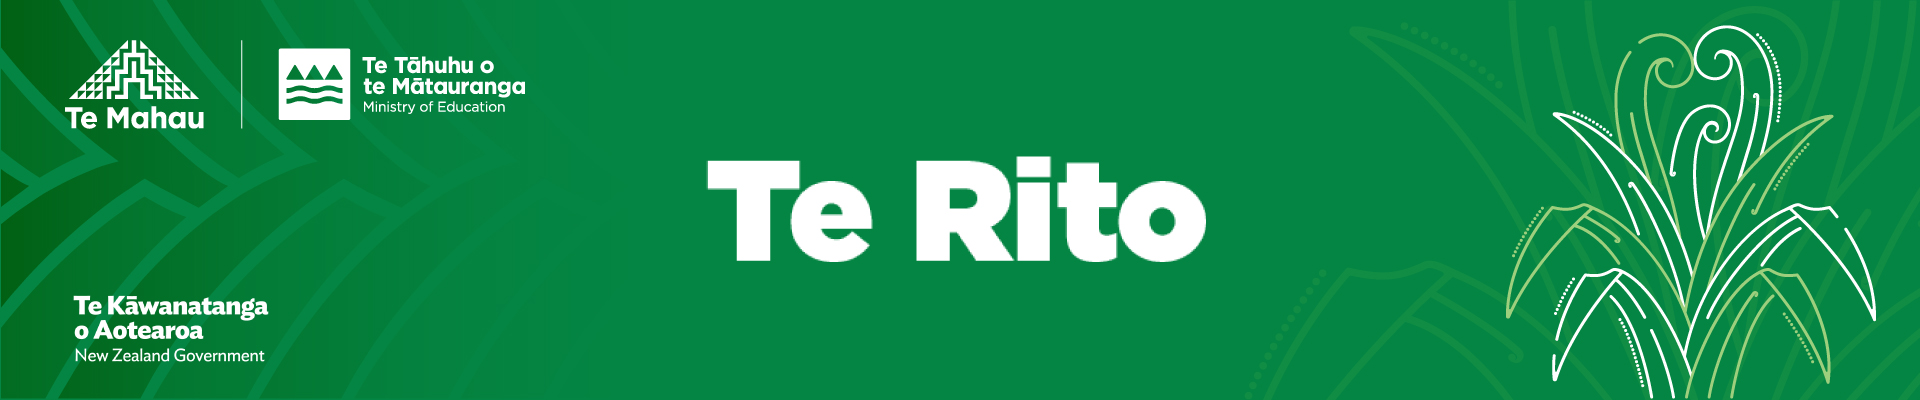 Te-Rito-banner_green-2